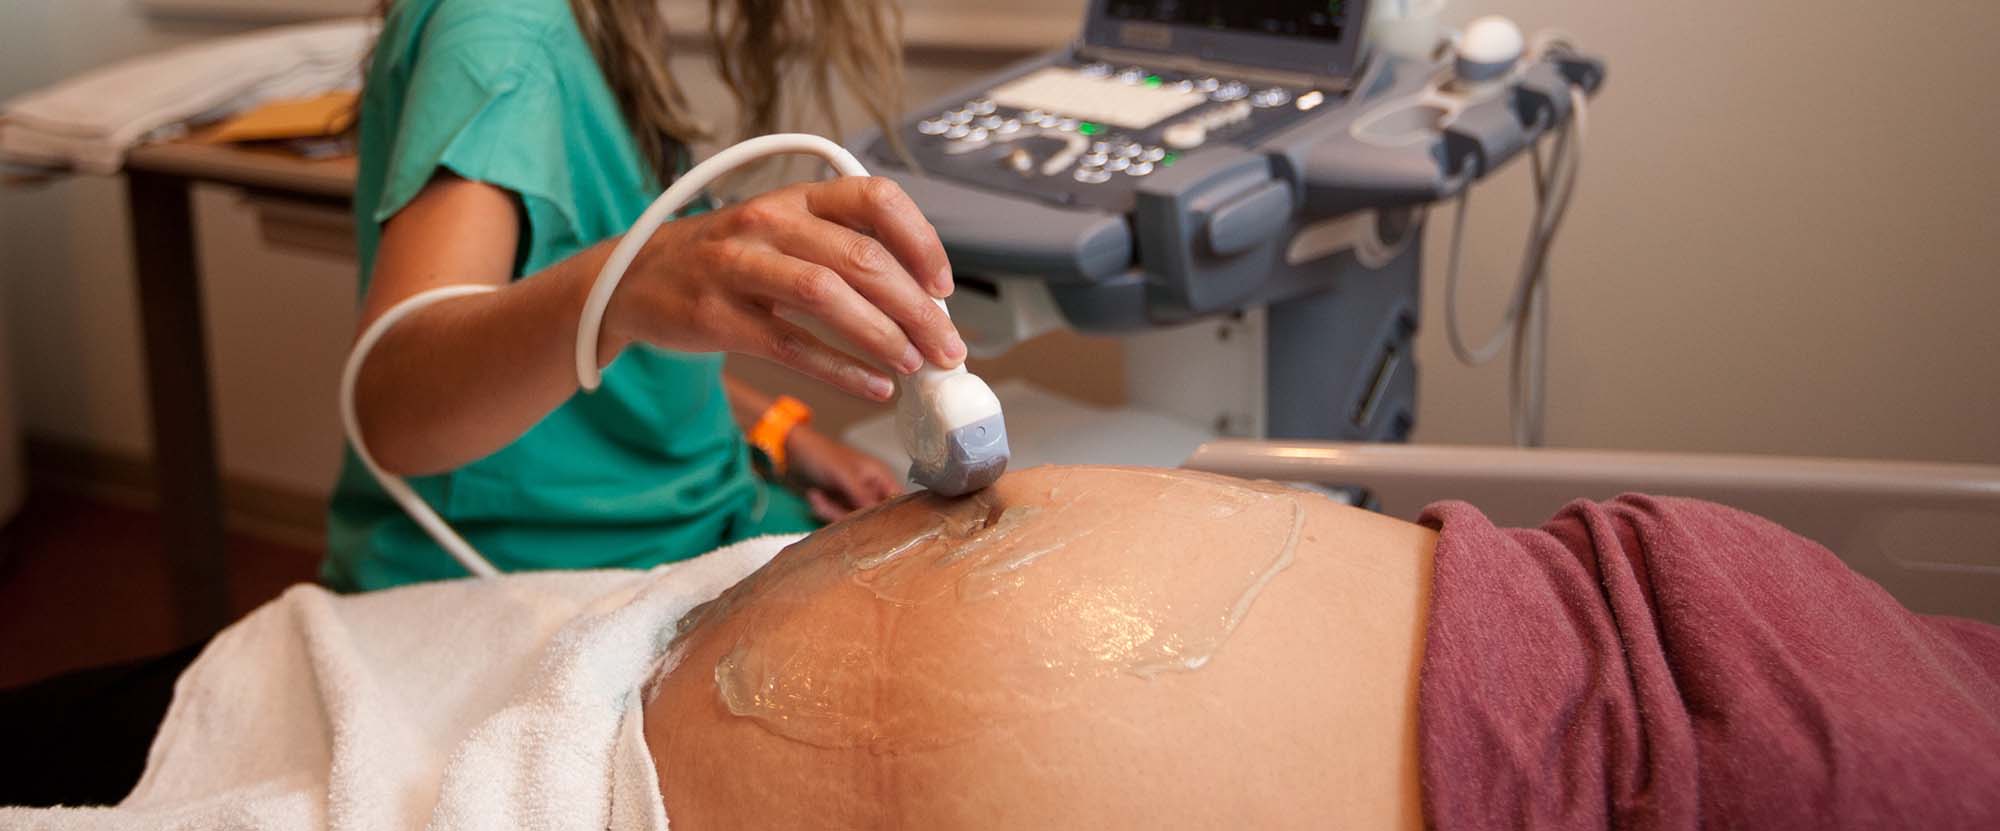 A pregnant mother undergoing an ultrasound